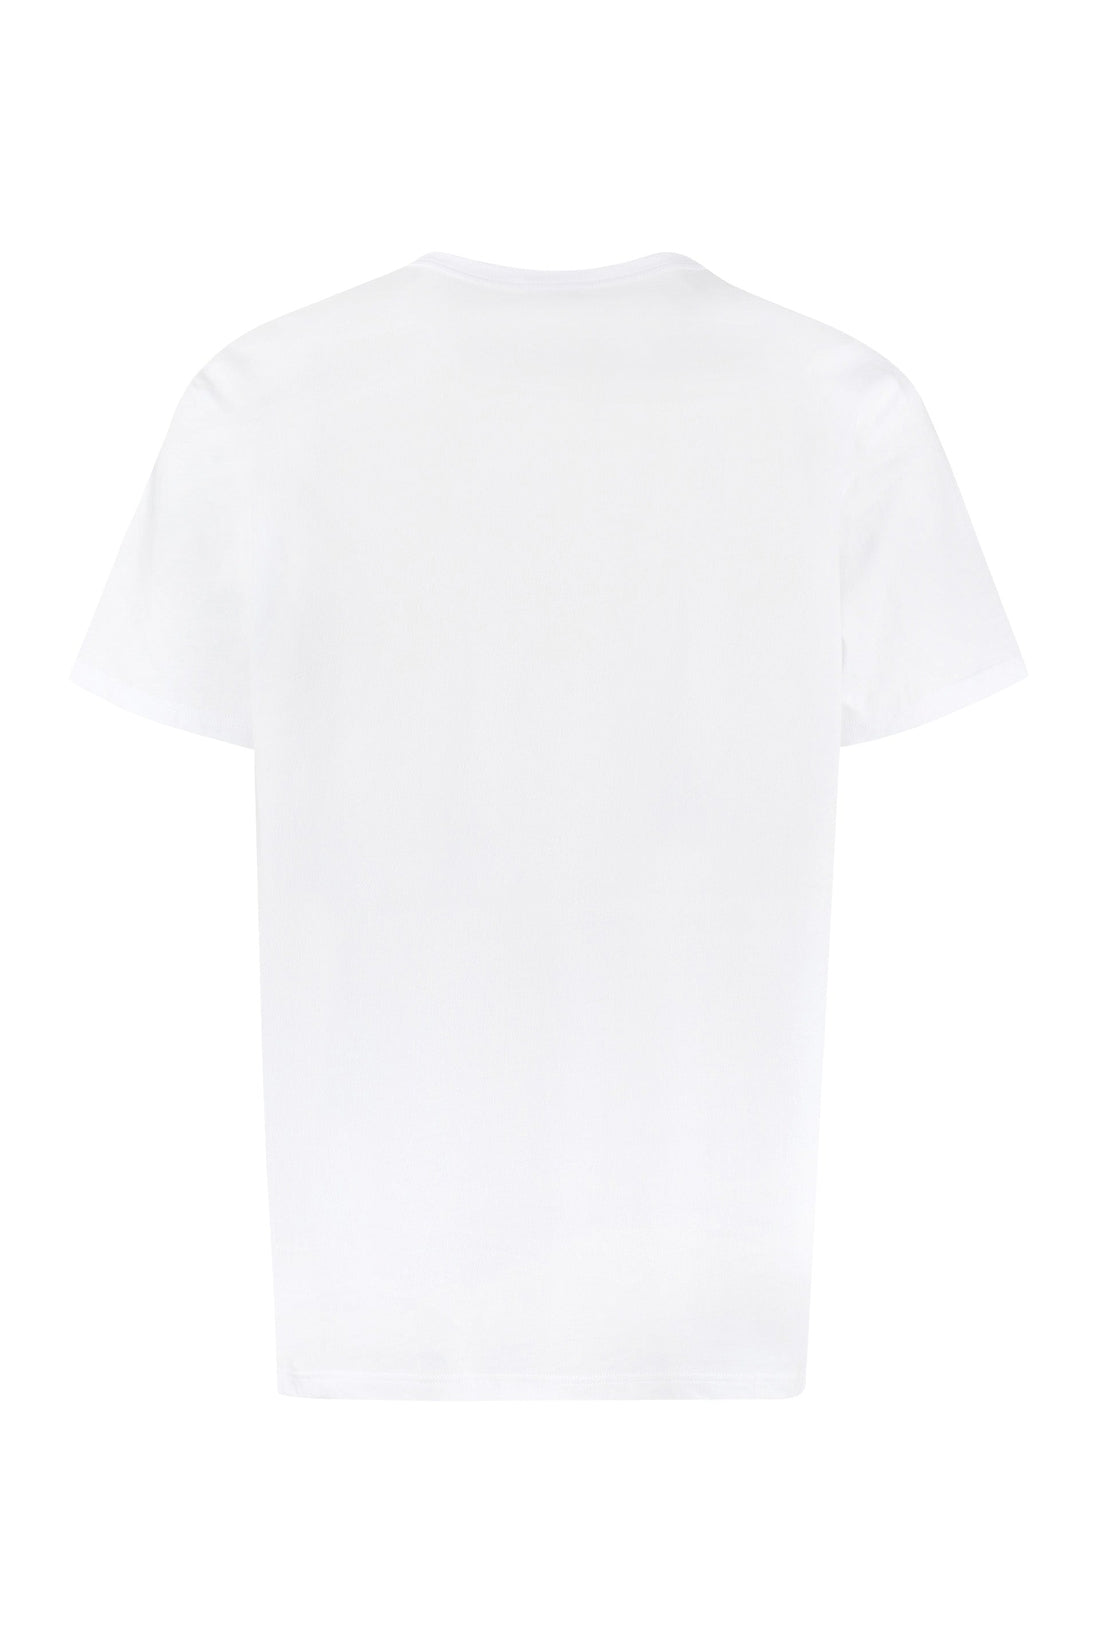 Alexander McQueen-OUTLET-SALE-Printed cotton T-shirt-ARCHIVIST